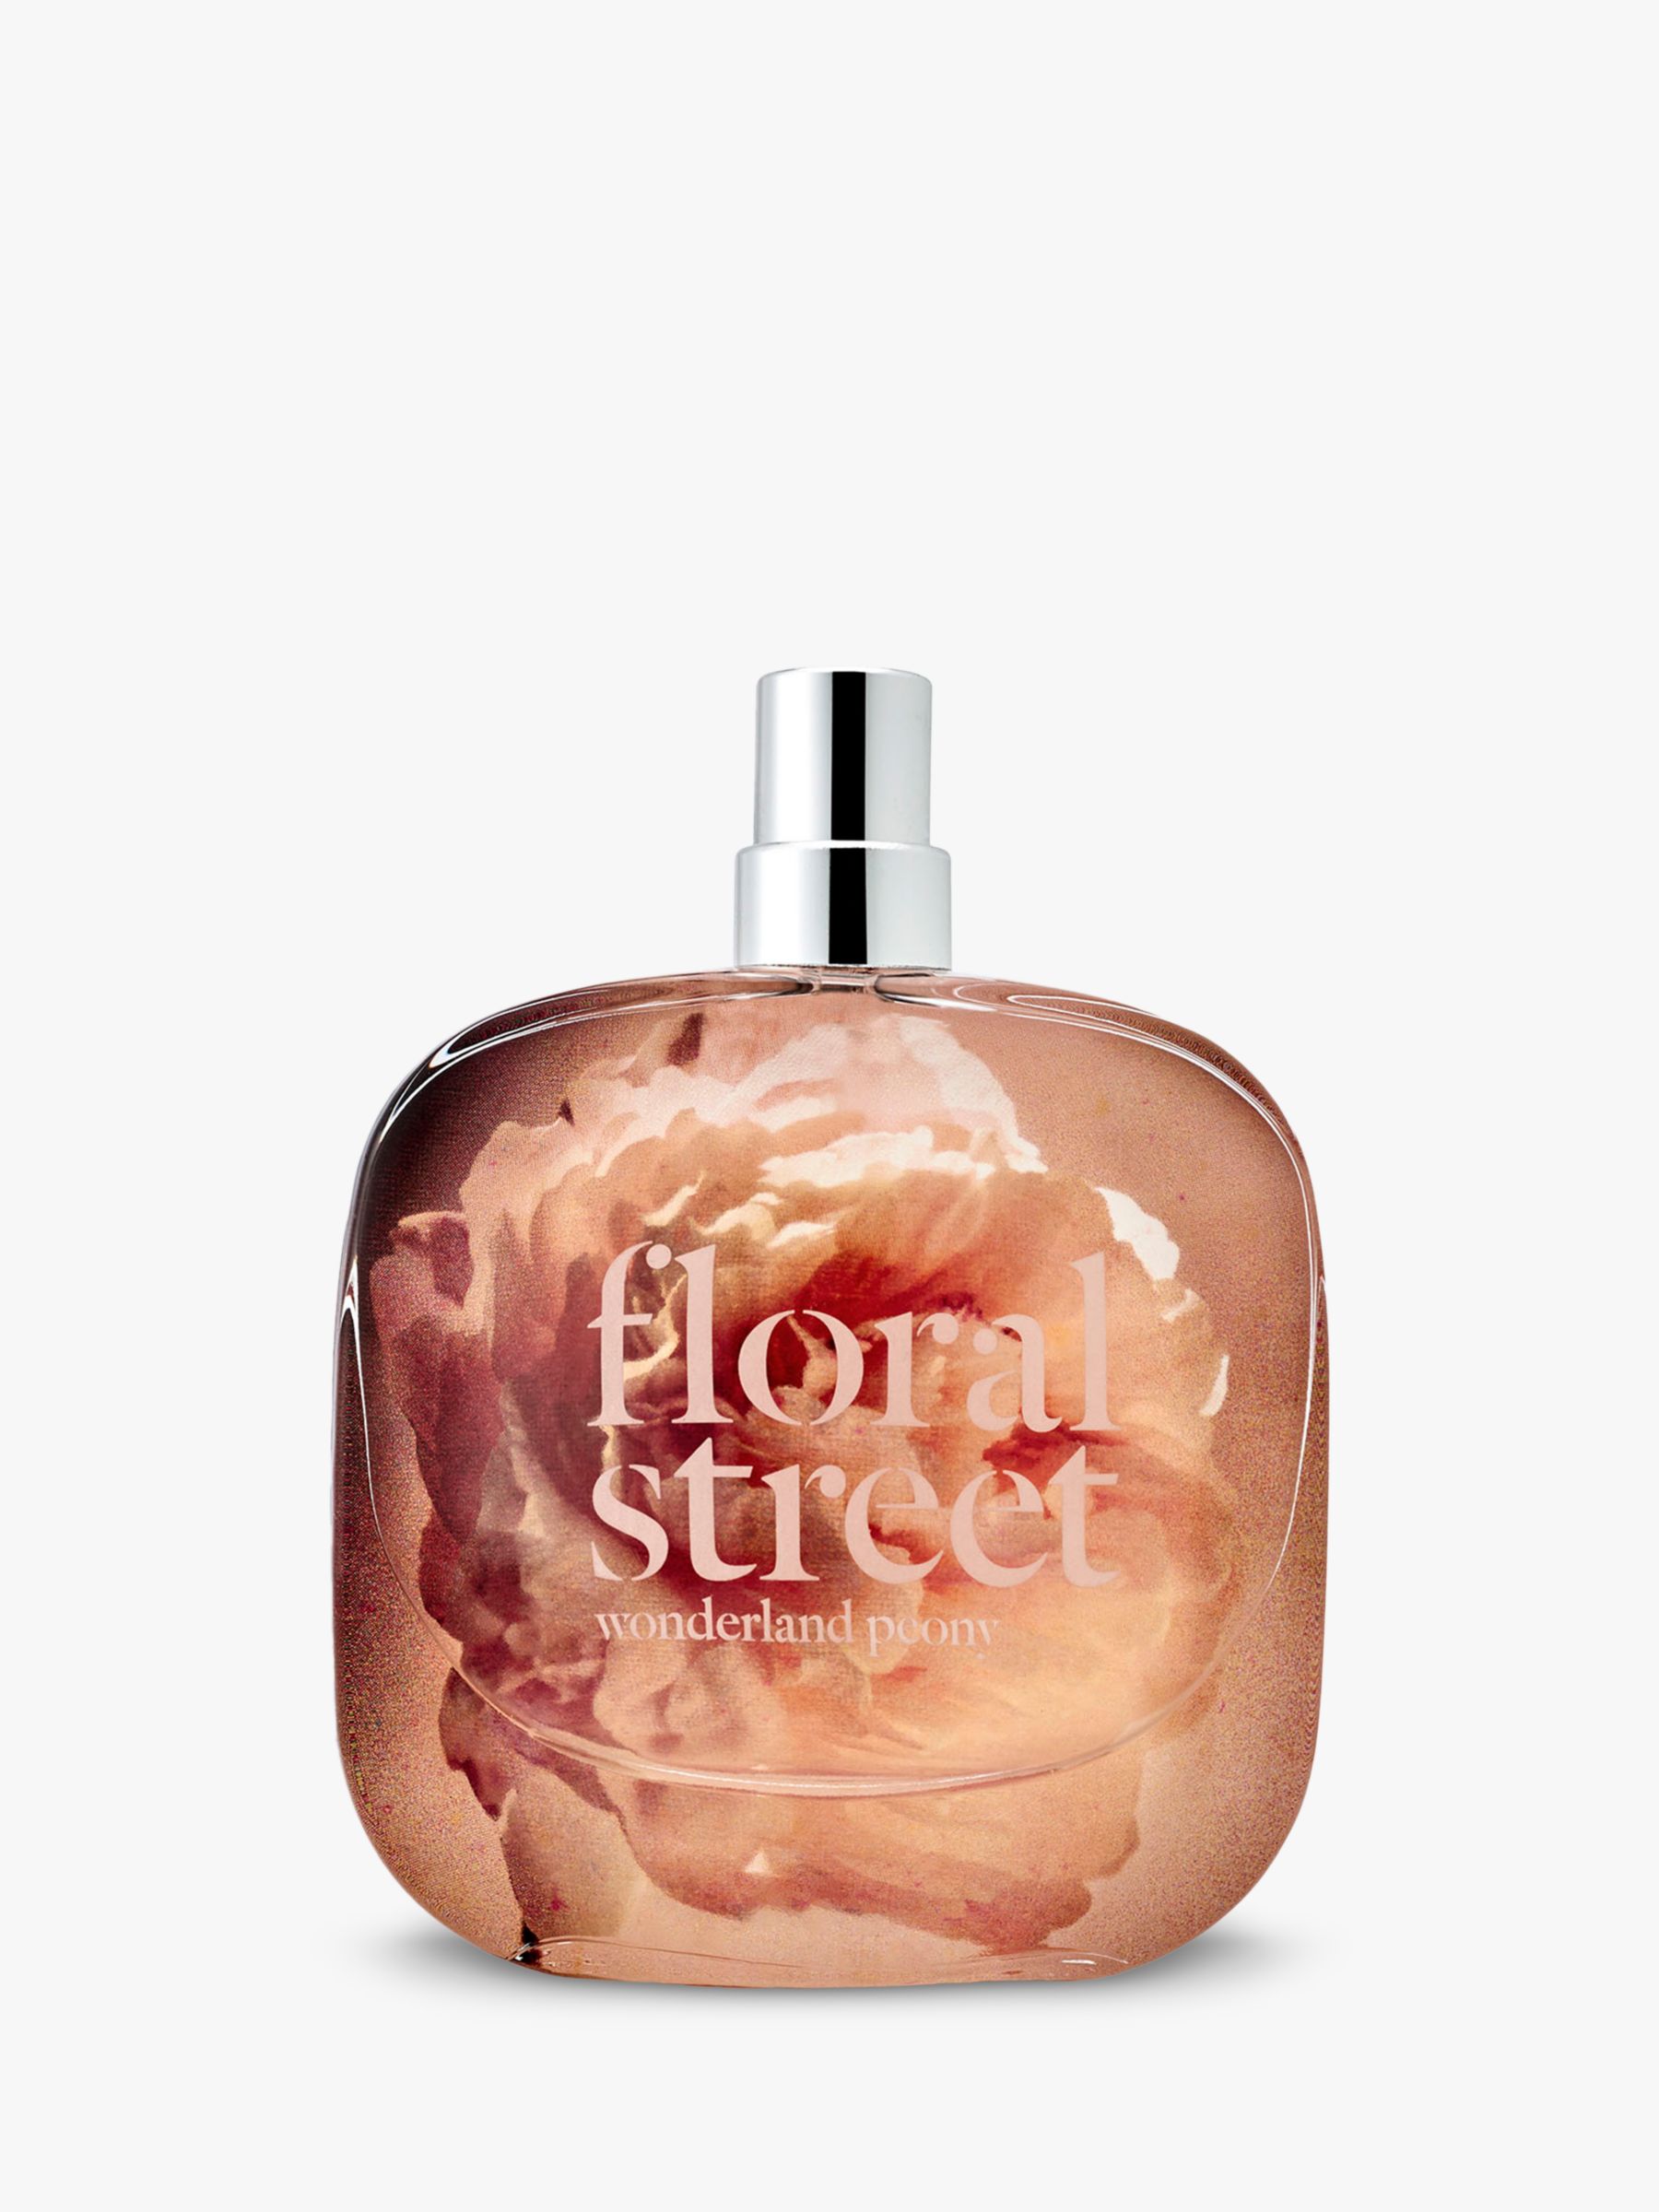 Floral Street Wonderland Peony Eau de Parfum